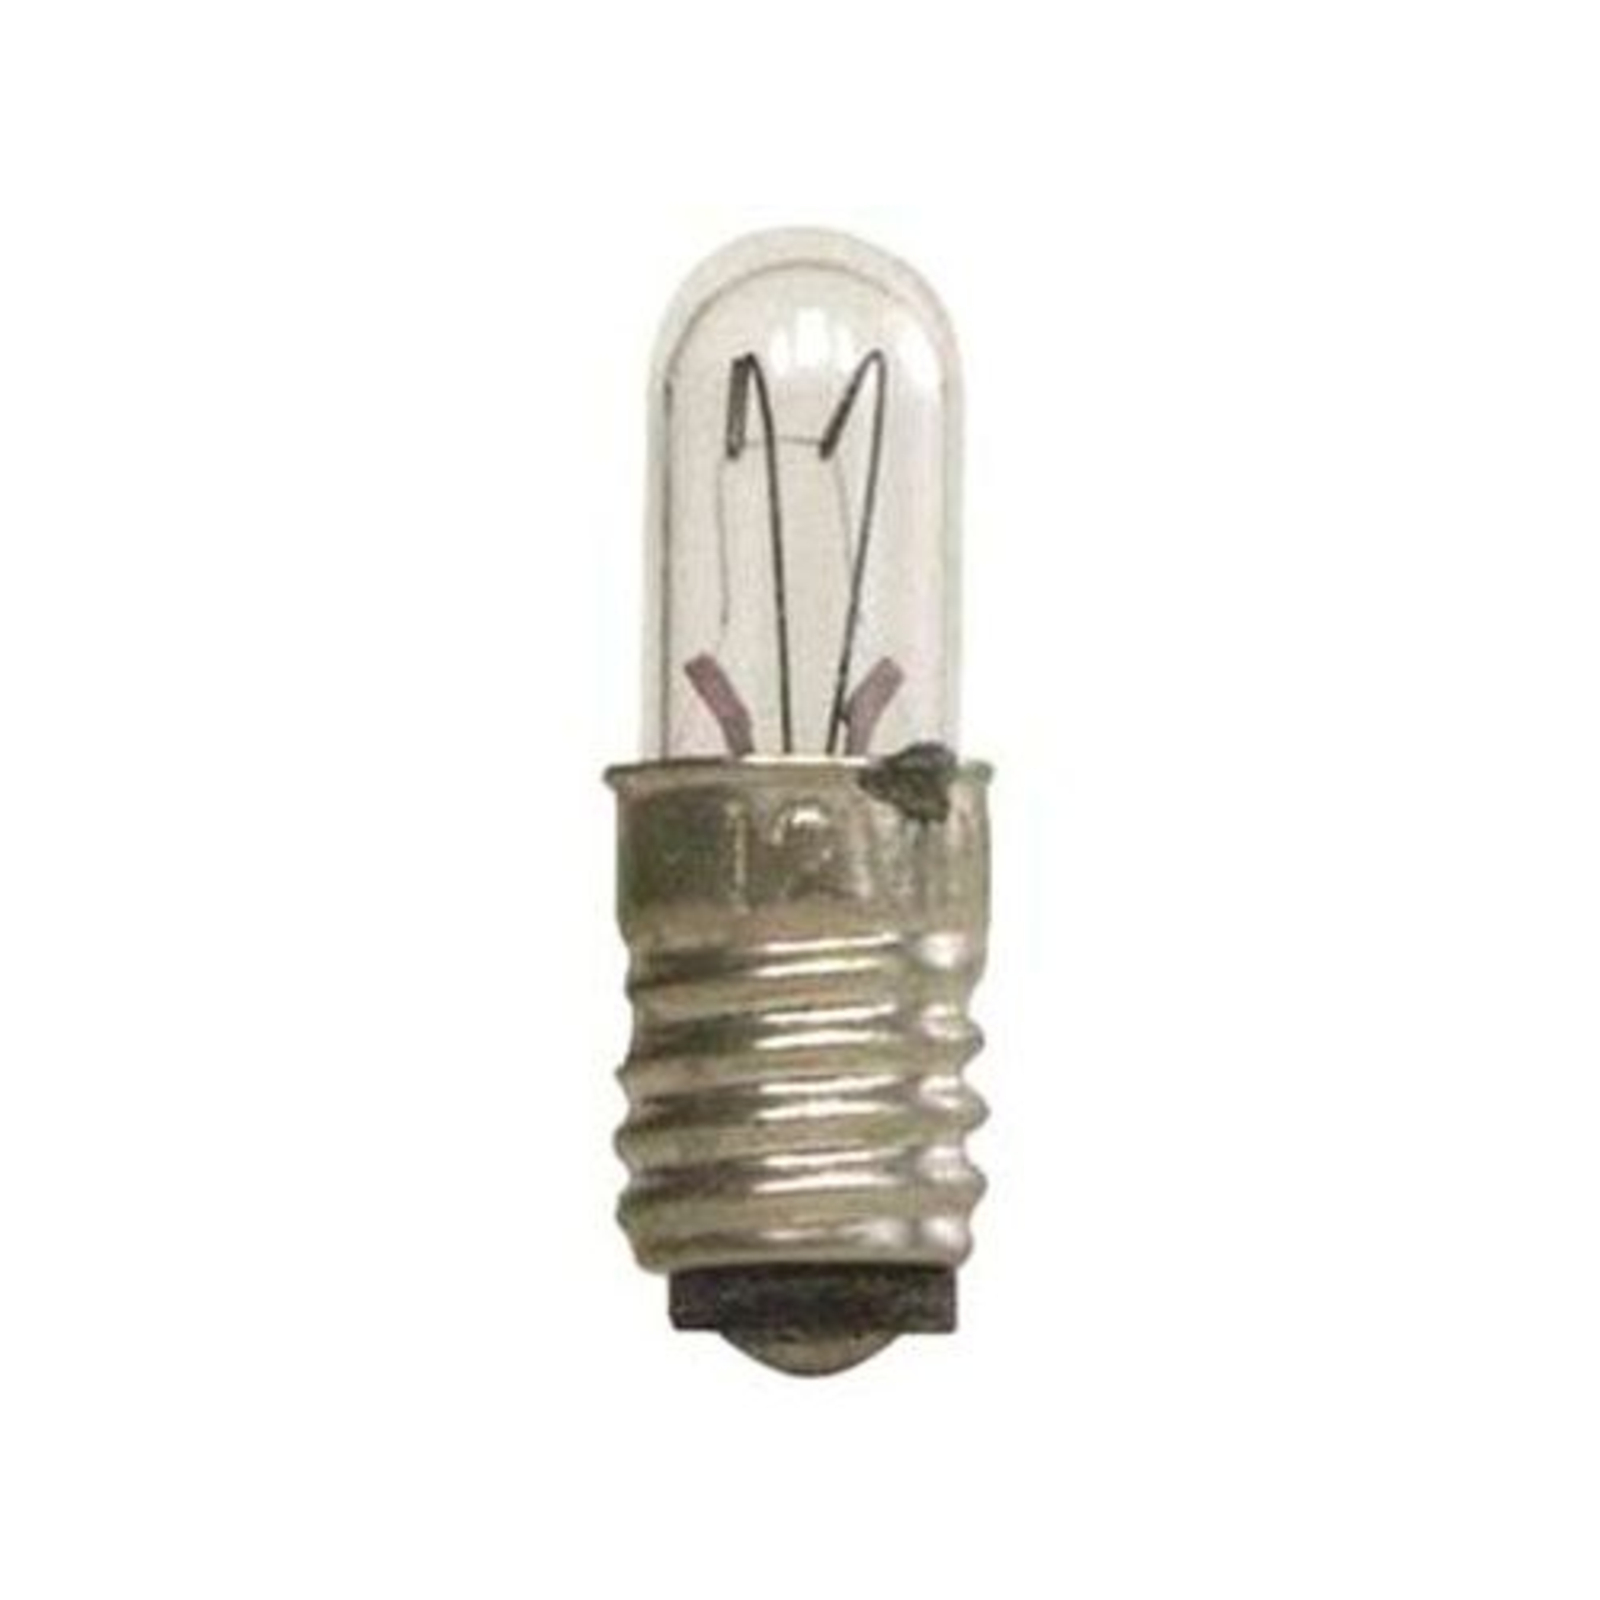 E5 0.4 W 12 V spare bulbs, 5-pack, clear